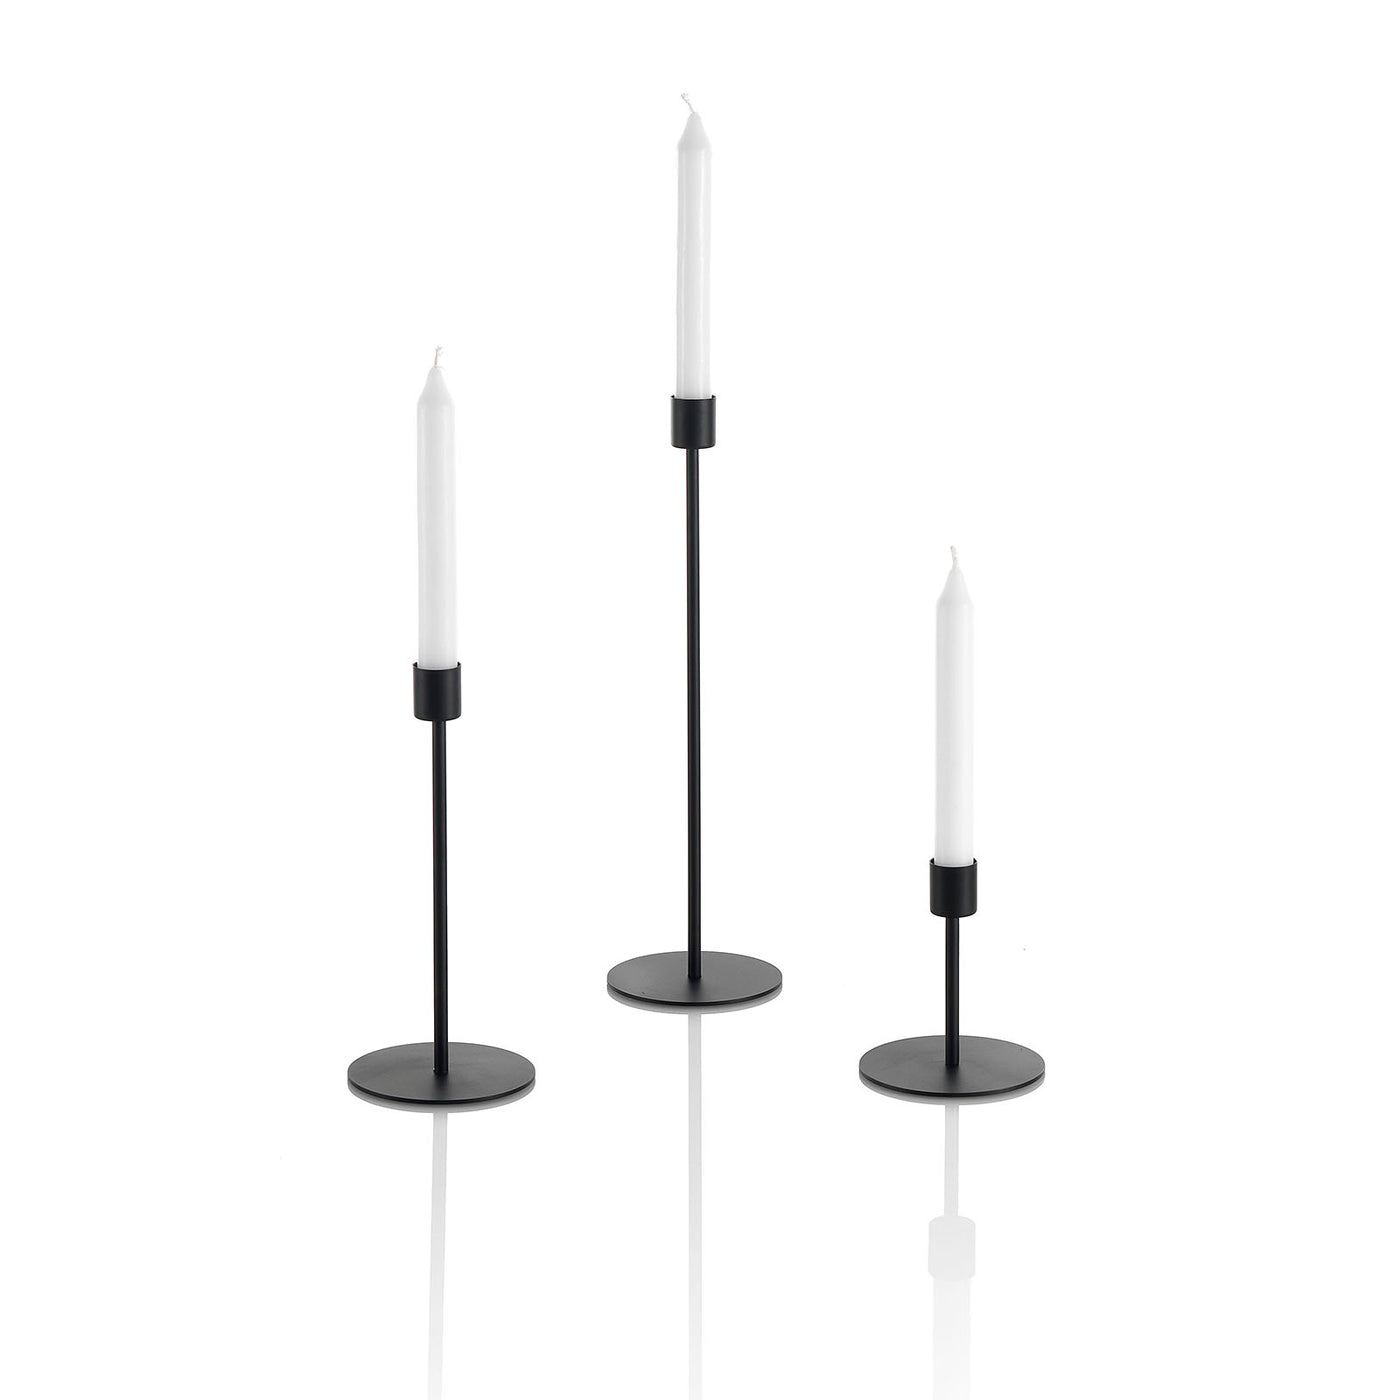 Set mit 3 schwarzen GUANG-Kerzenhaltern